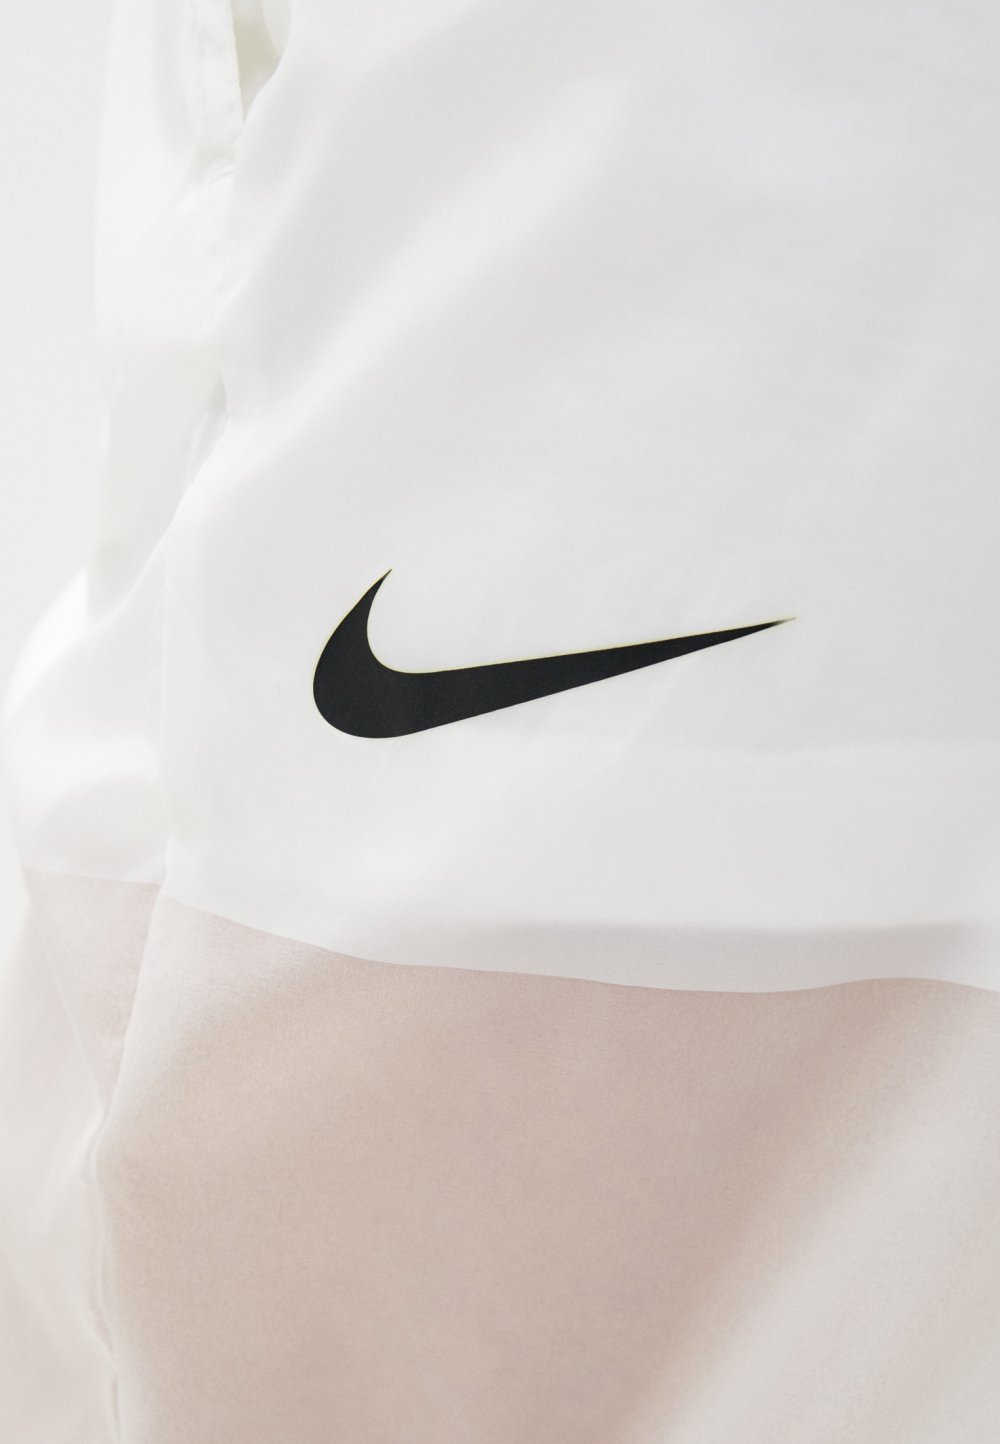 Nike logo Exyl